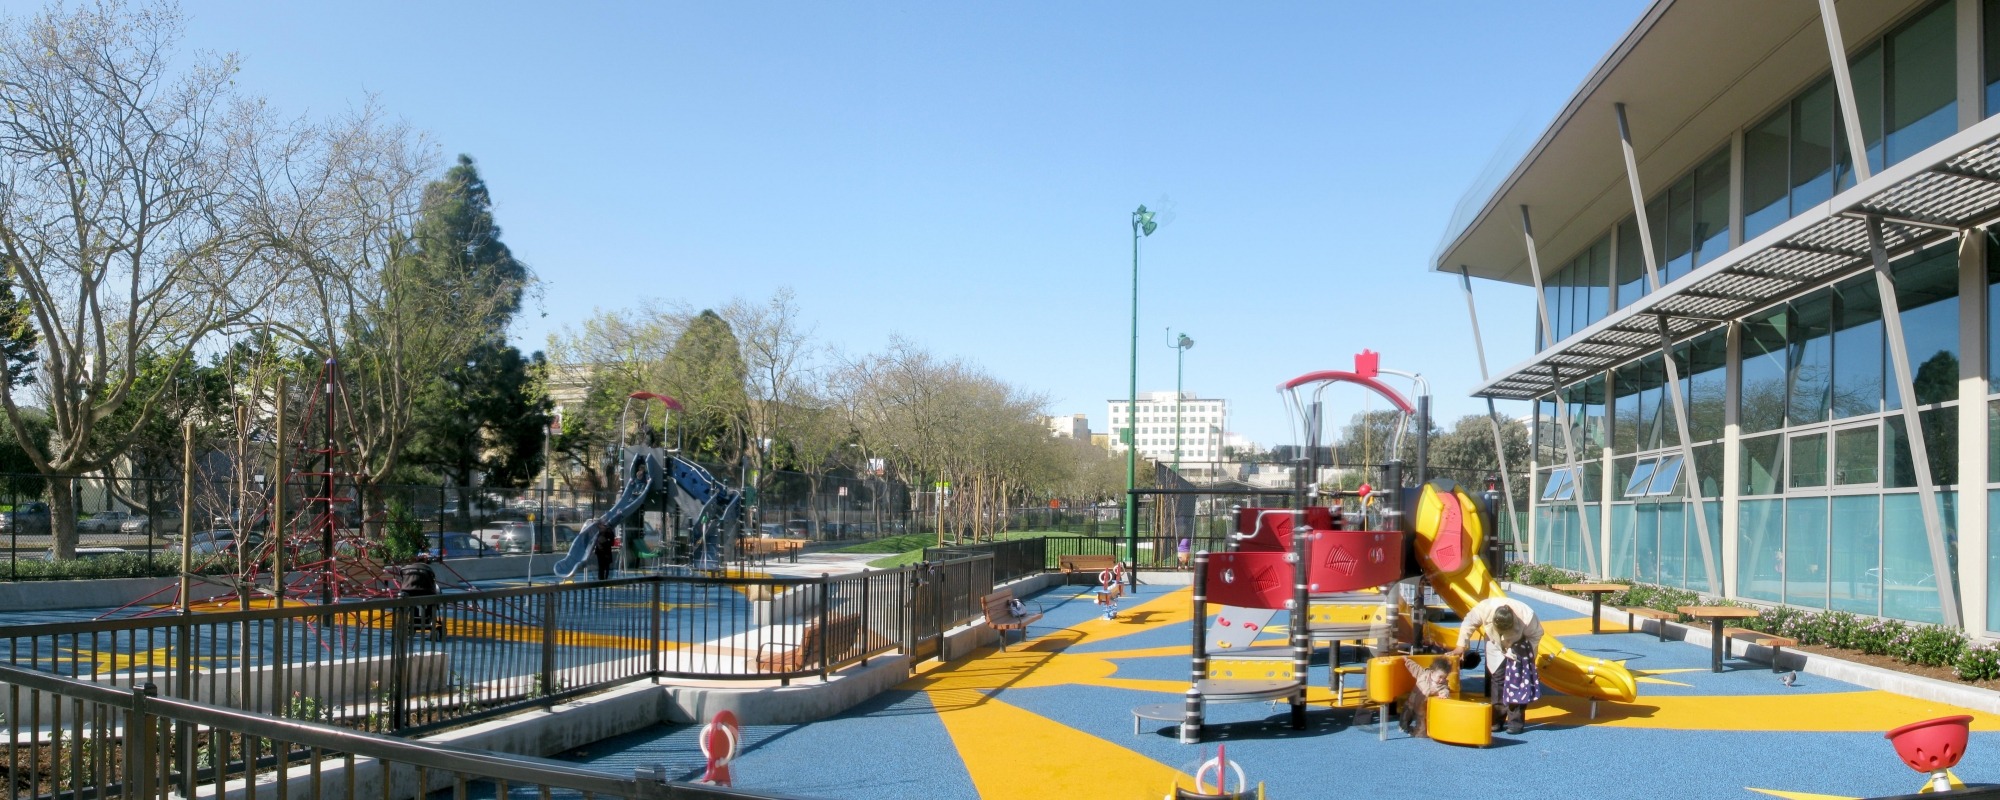 Hamilton Recreation Center & Playground Renovation